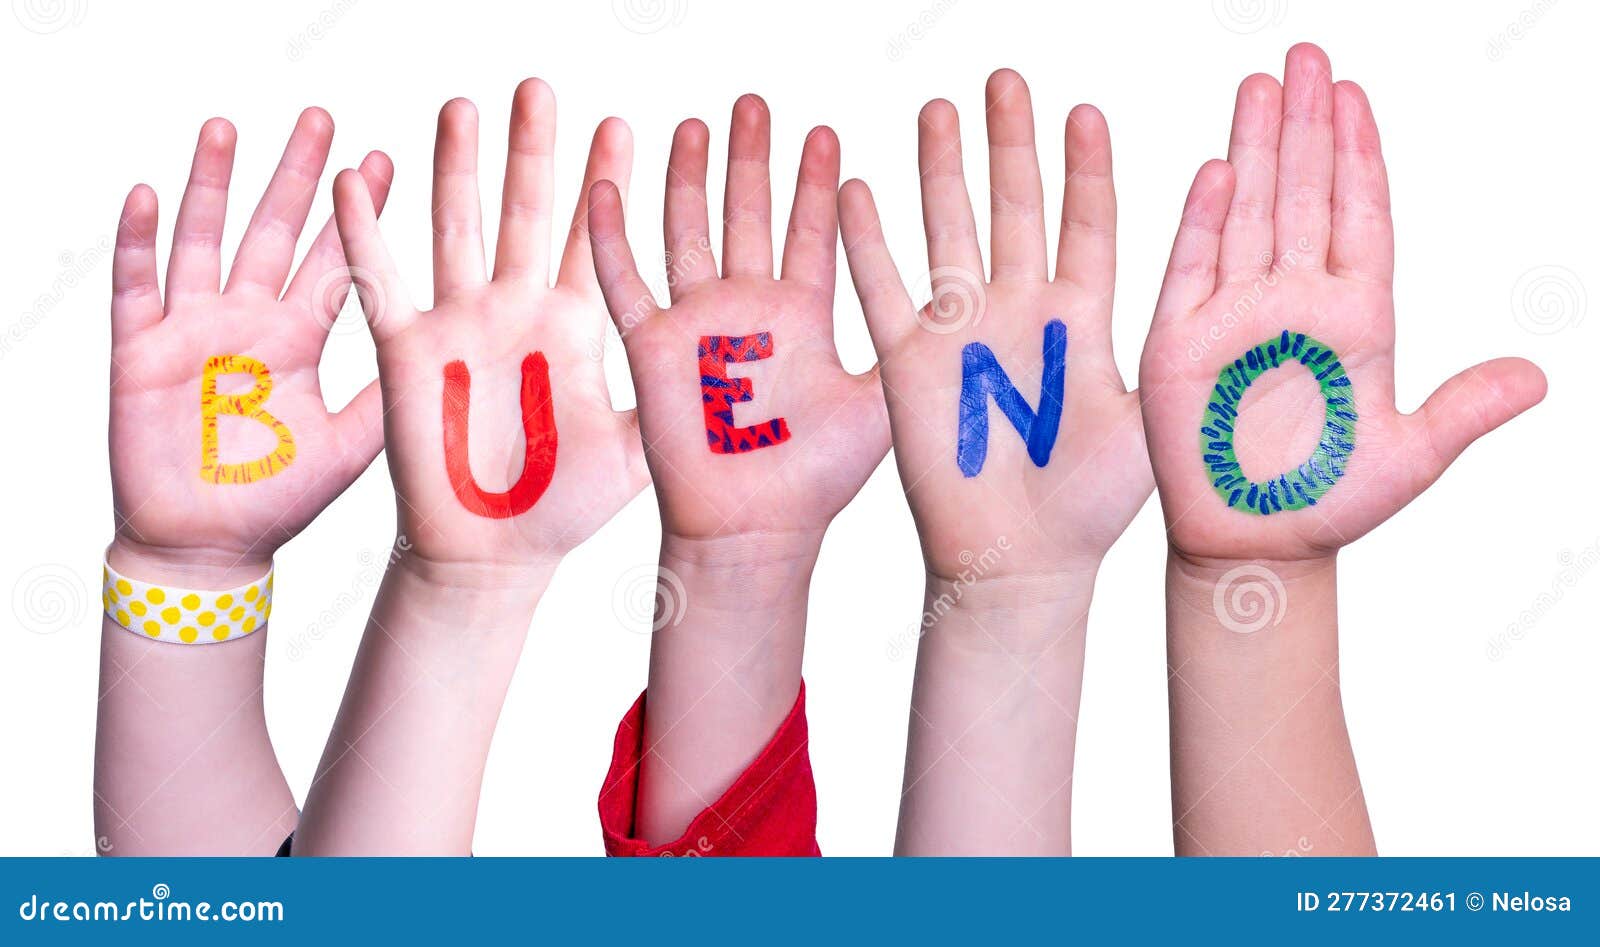 children hands building word bueno means good,  background